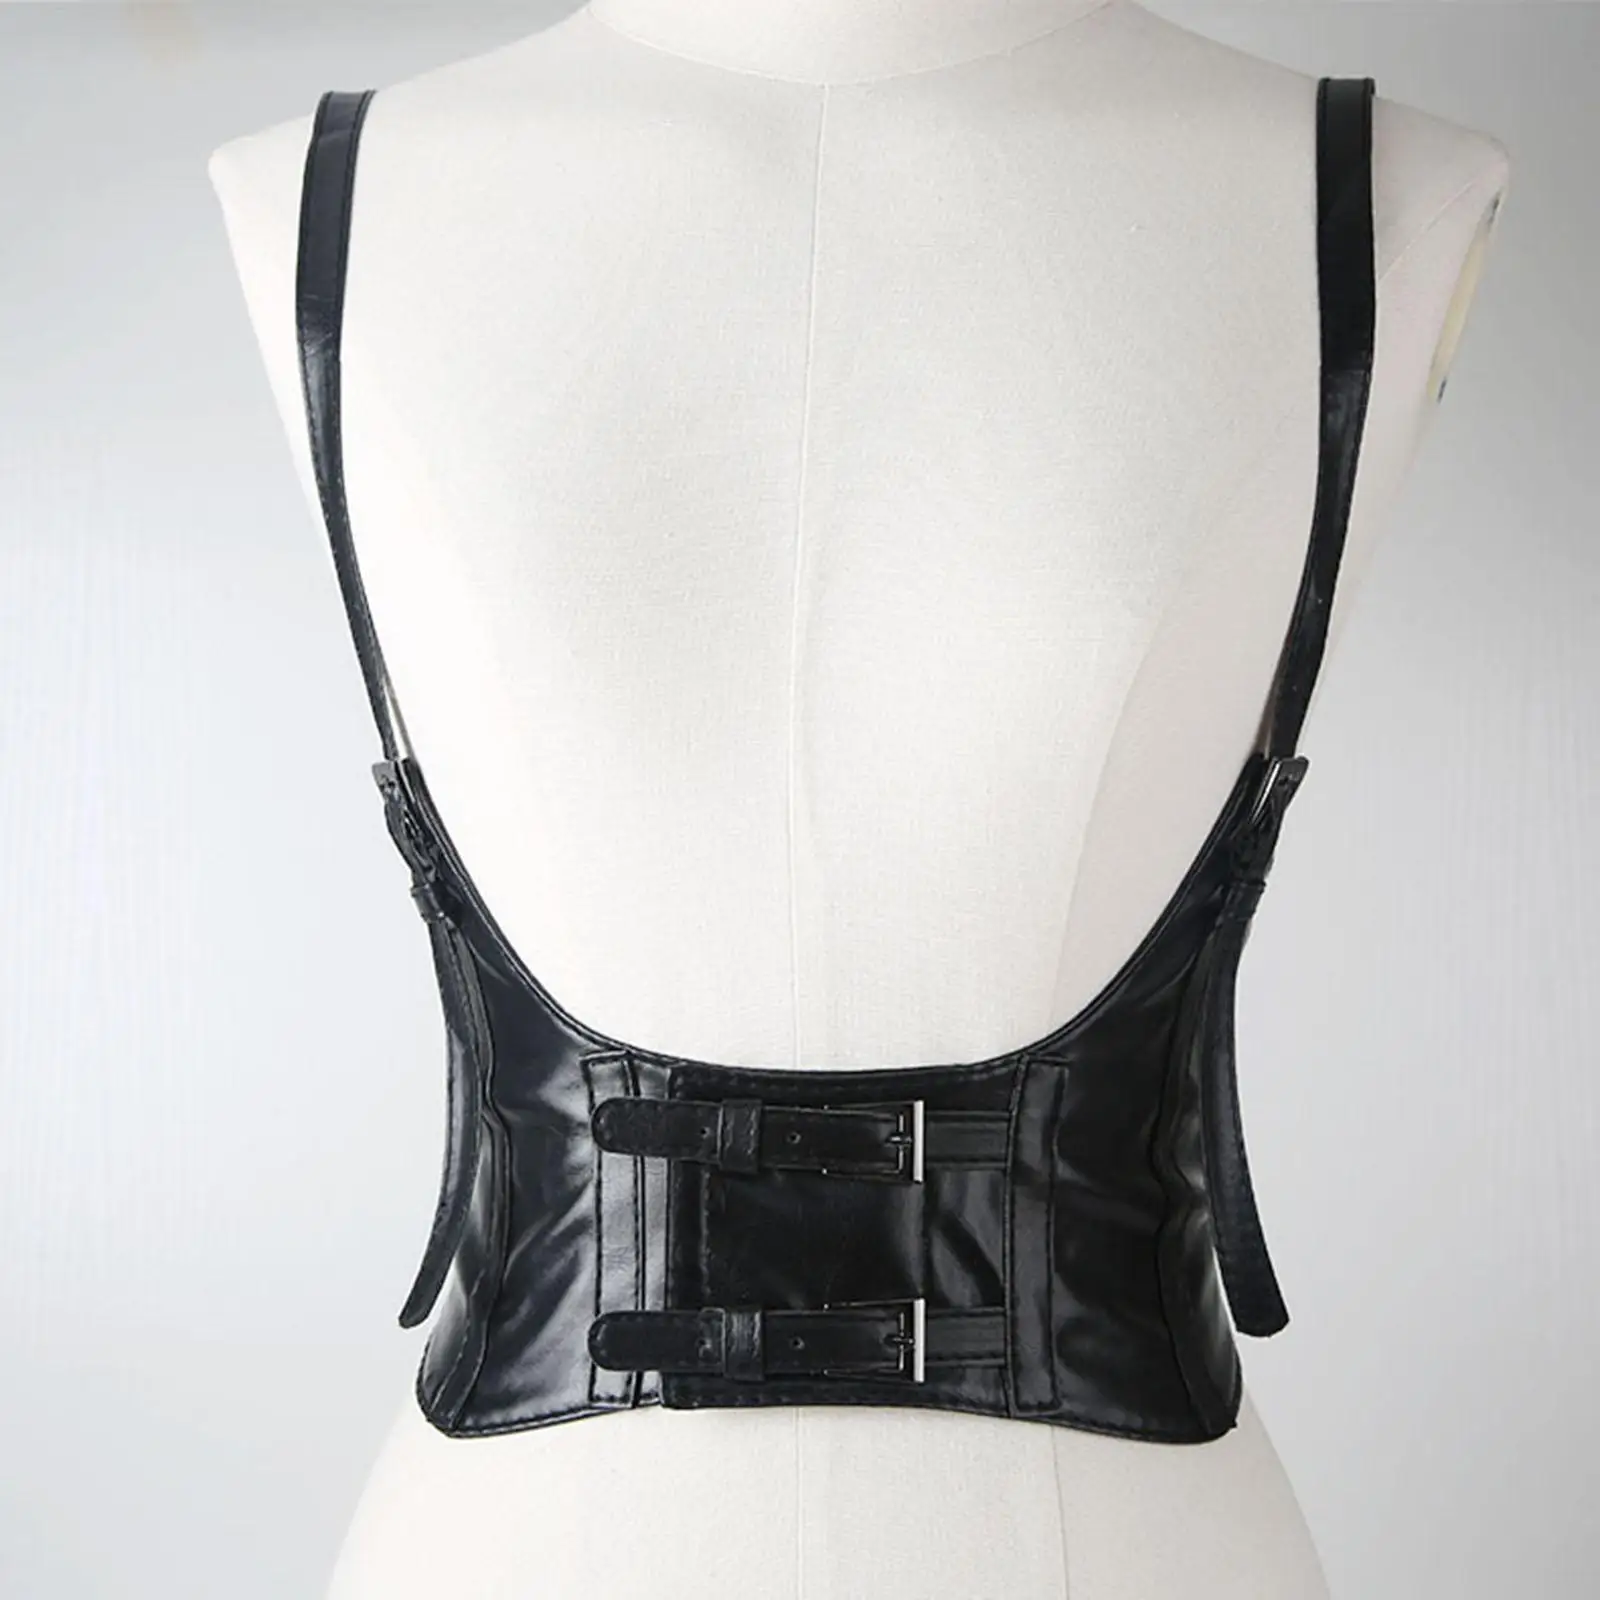 Punk Waist Harness Belt Fashion Black Adjustable Waist Belt Strappy Body Accessories Jewelry for Women and Girls